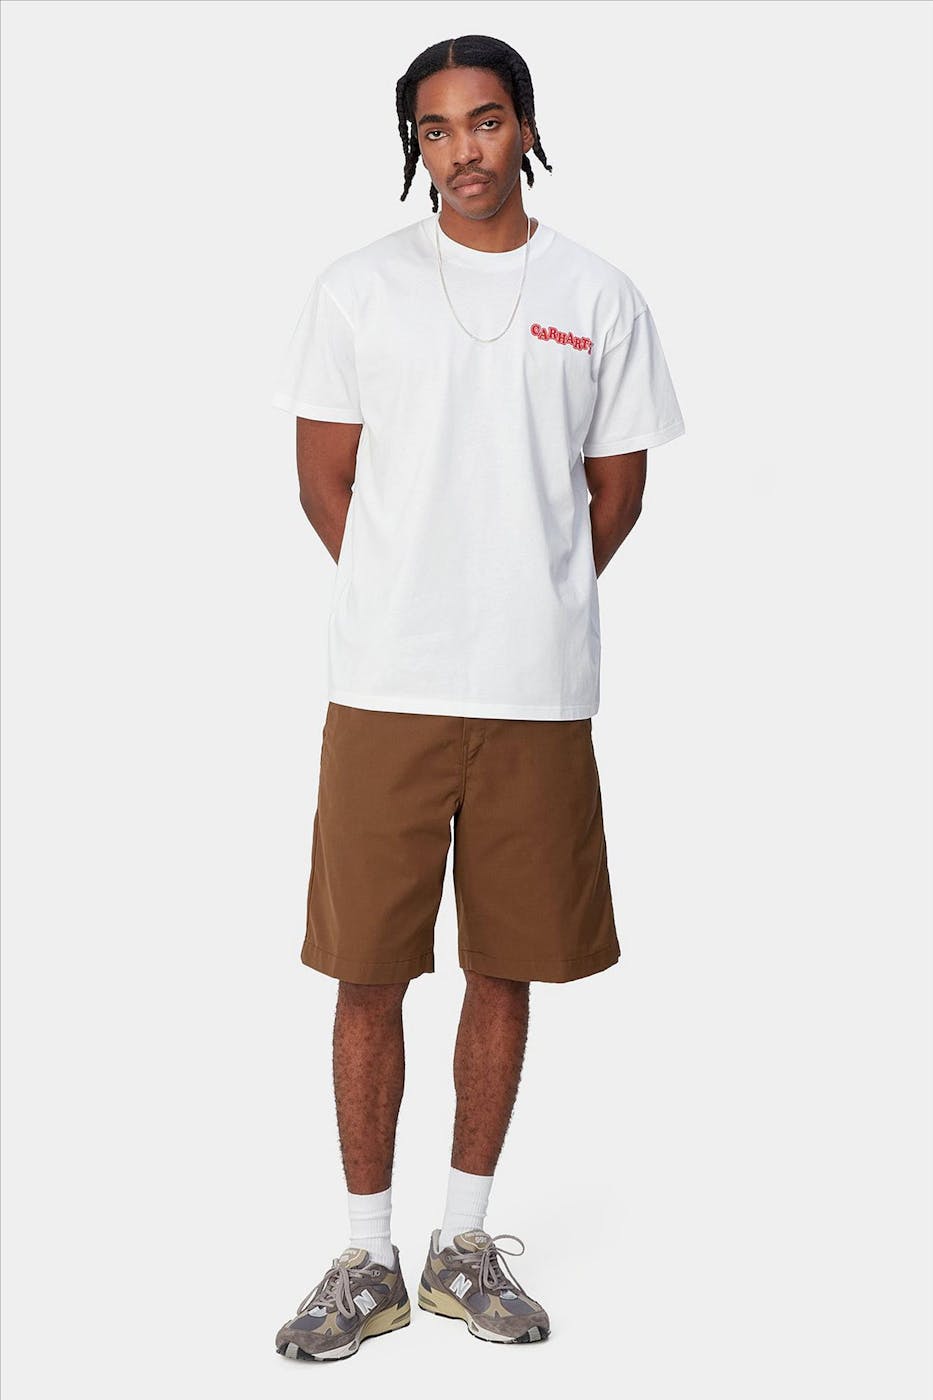 Carhartt WIP - Witte Fast Food T-shirt